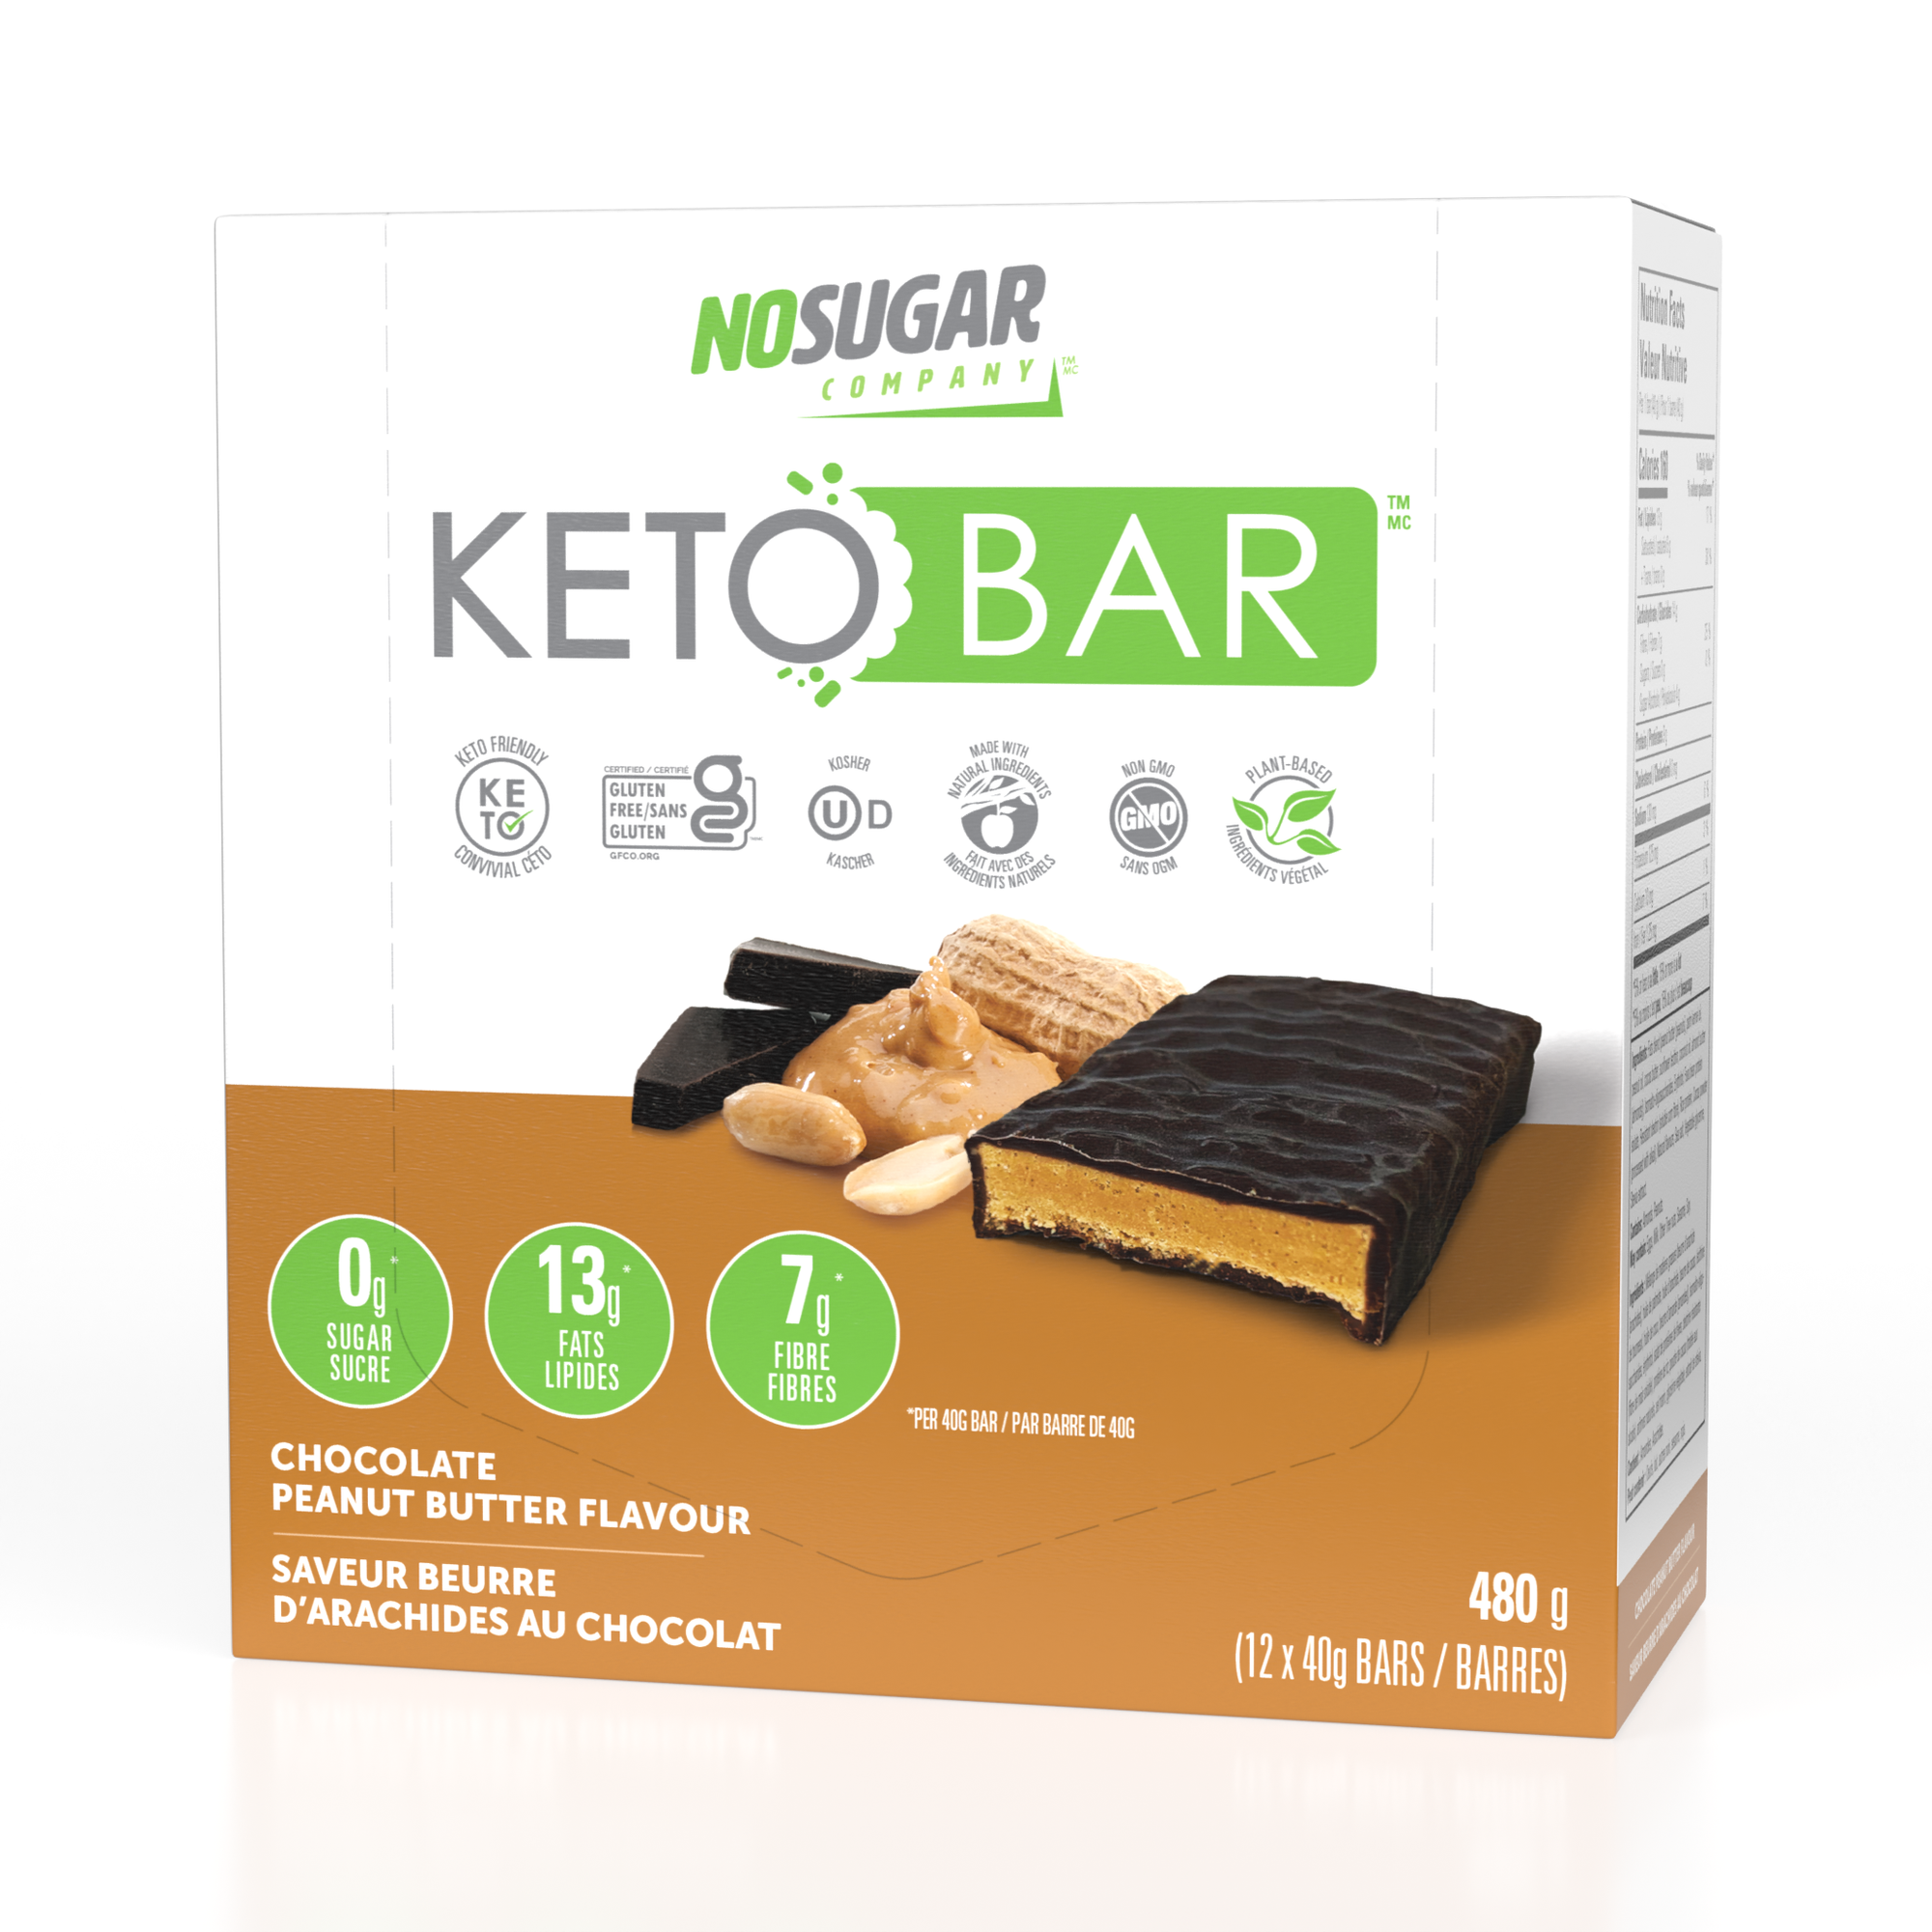 No Sugar Keto Bar Chocolate Peanut Butter - 12 Bars, 40g (1.41oz) per Bar